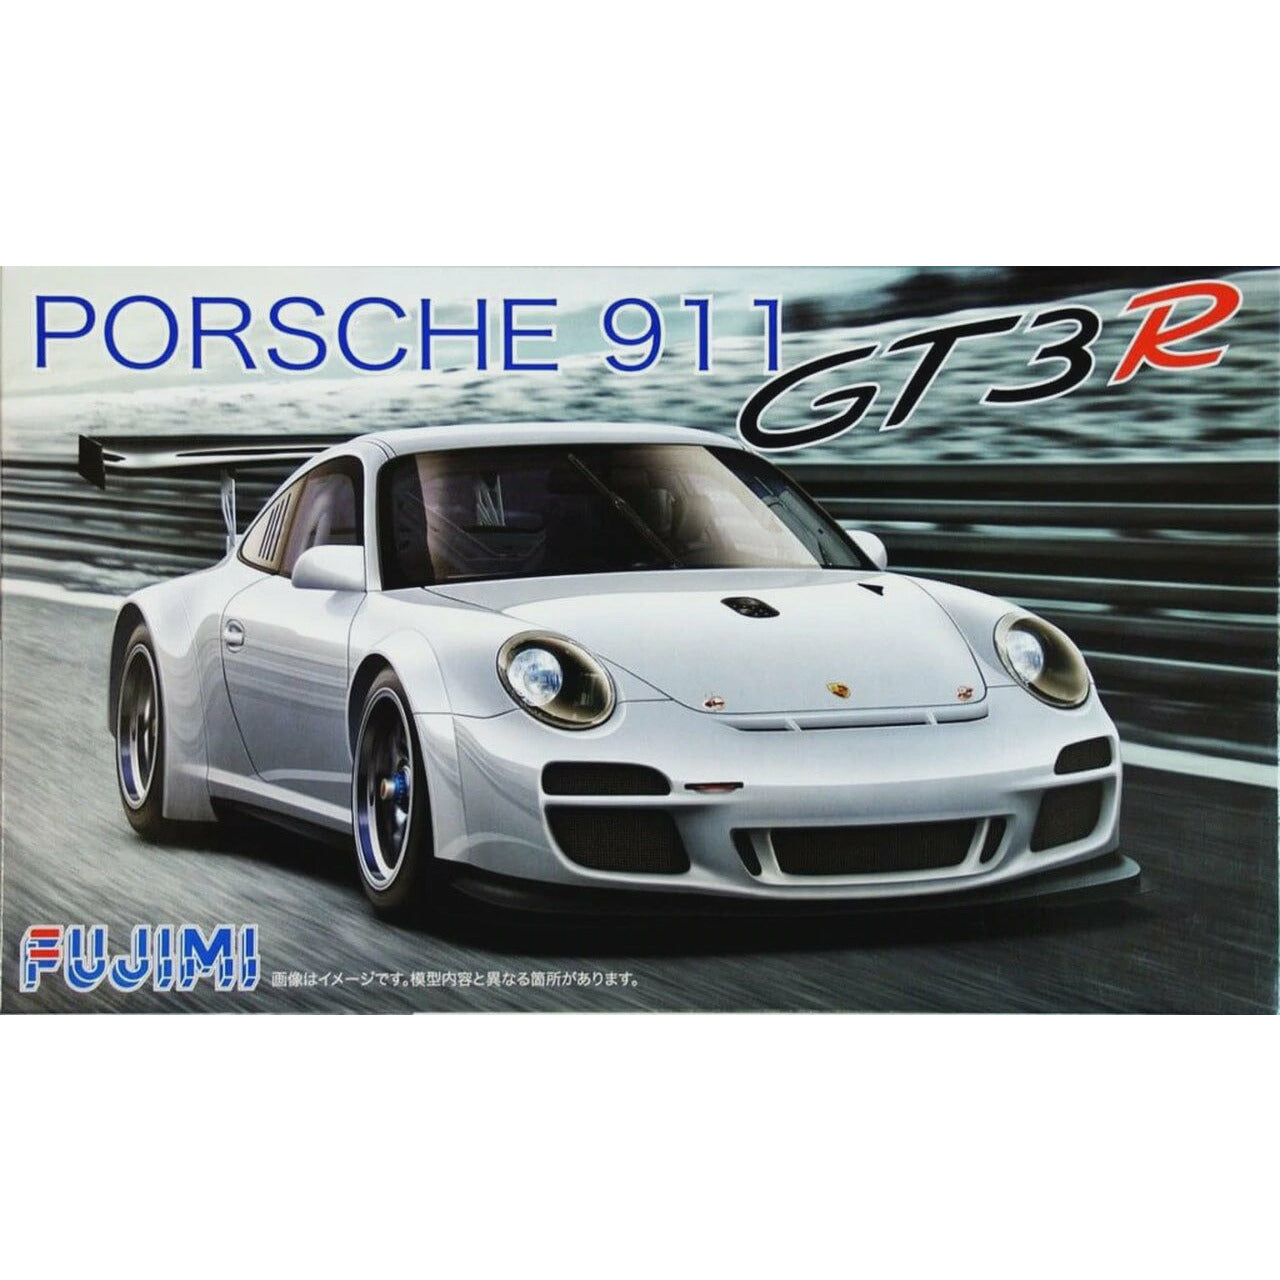 Porsche 911GT3R 1/24 #123905 by Fujimi